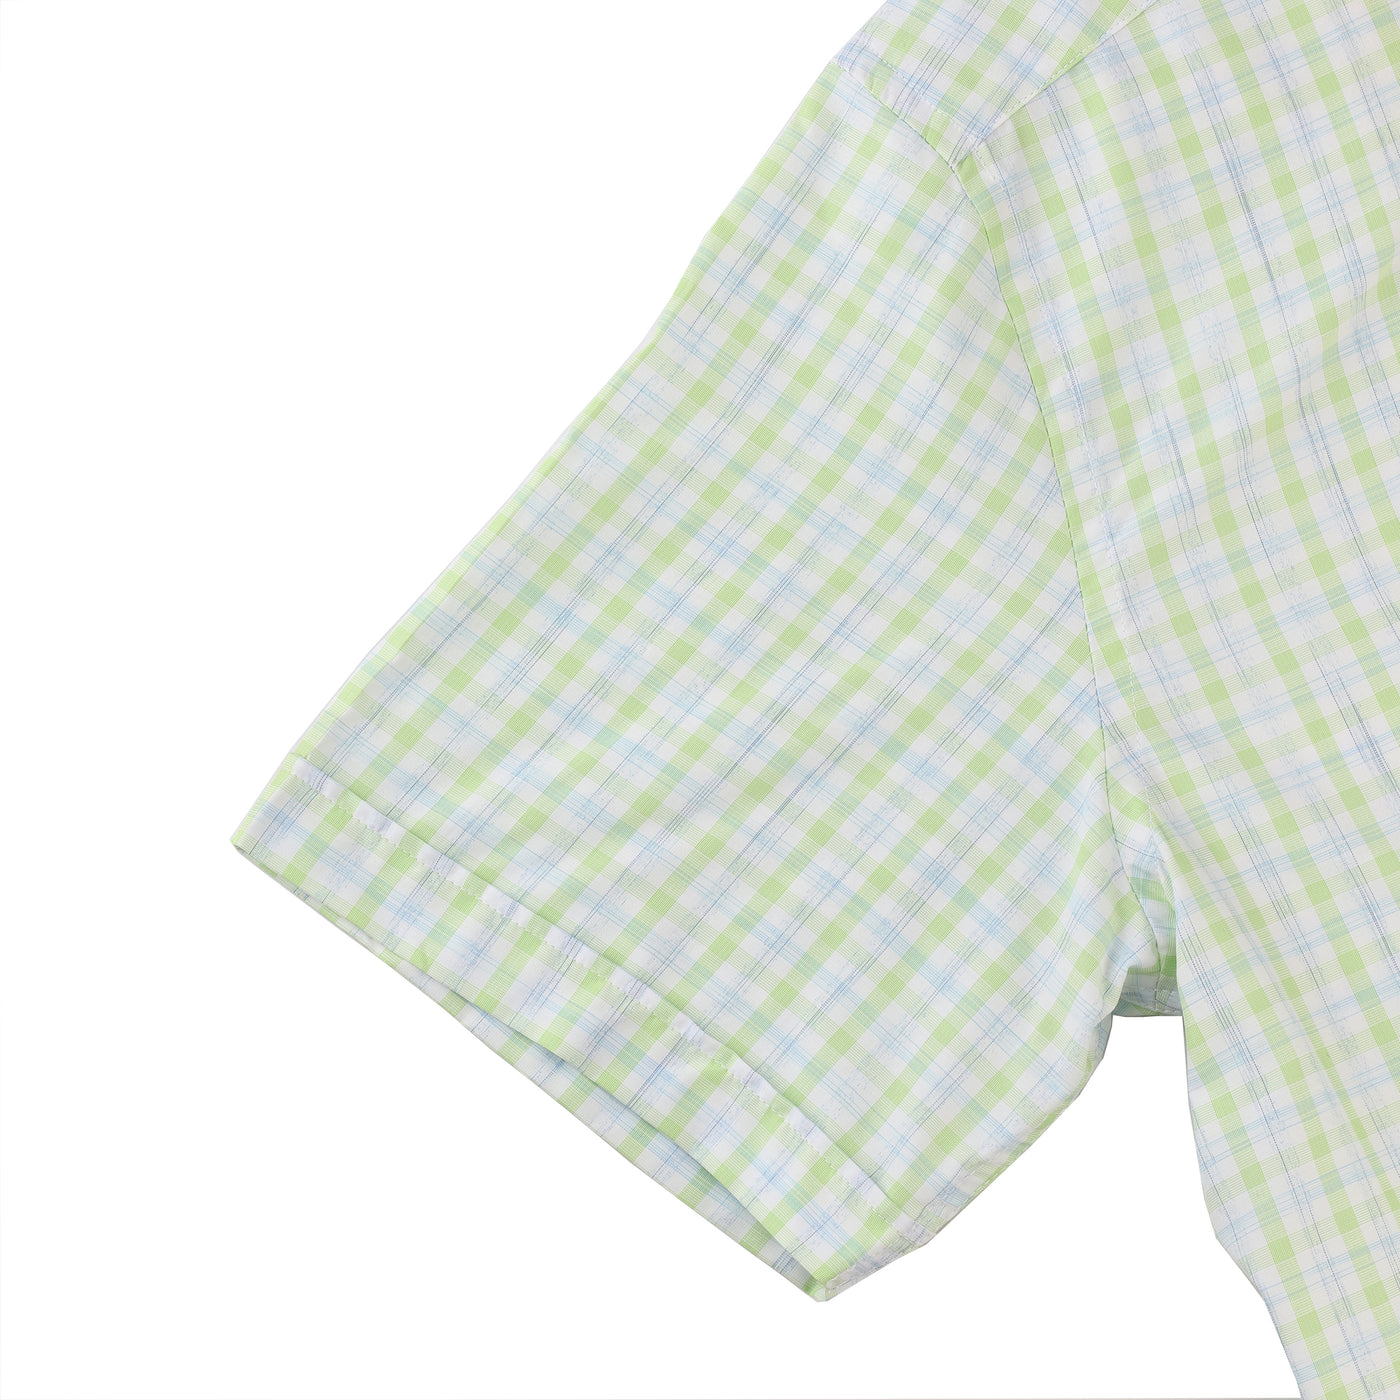 Half-sleeves Light-Green shirt